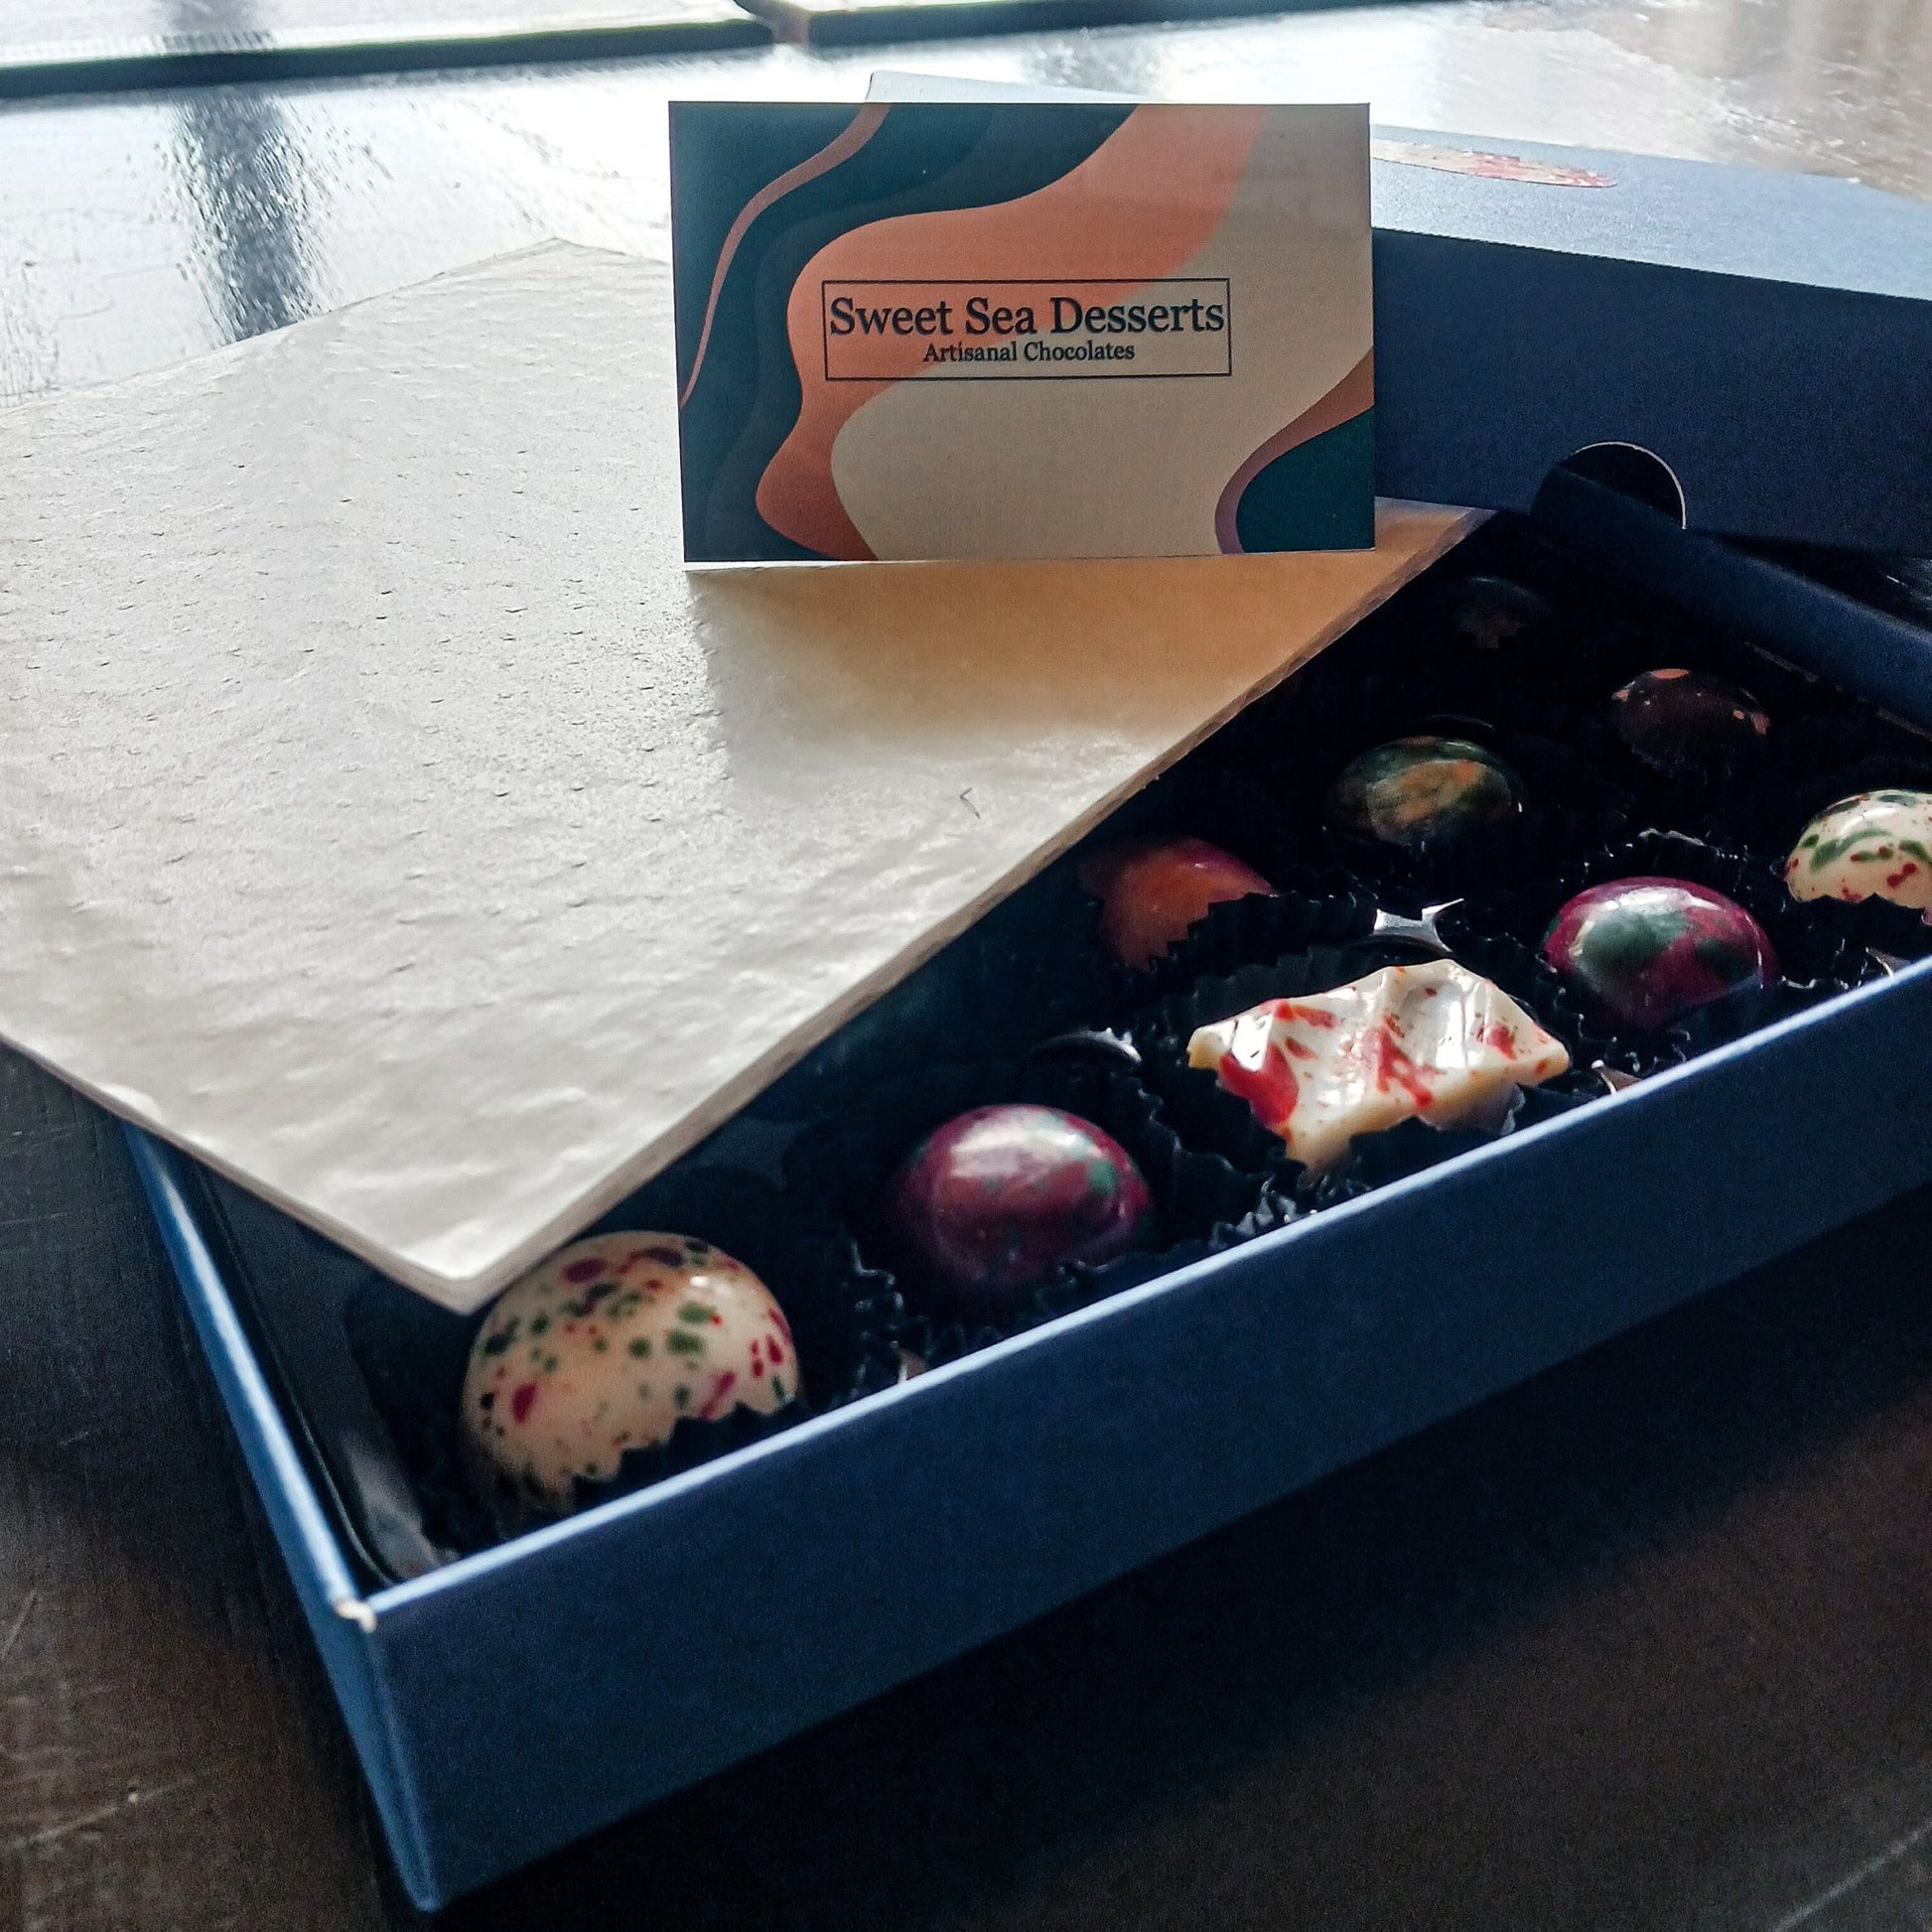 Box of 25 Bonbons